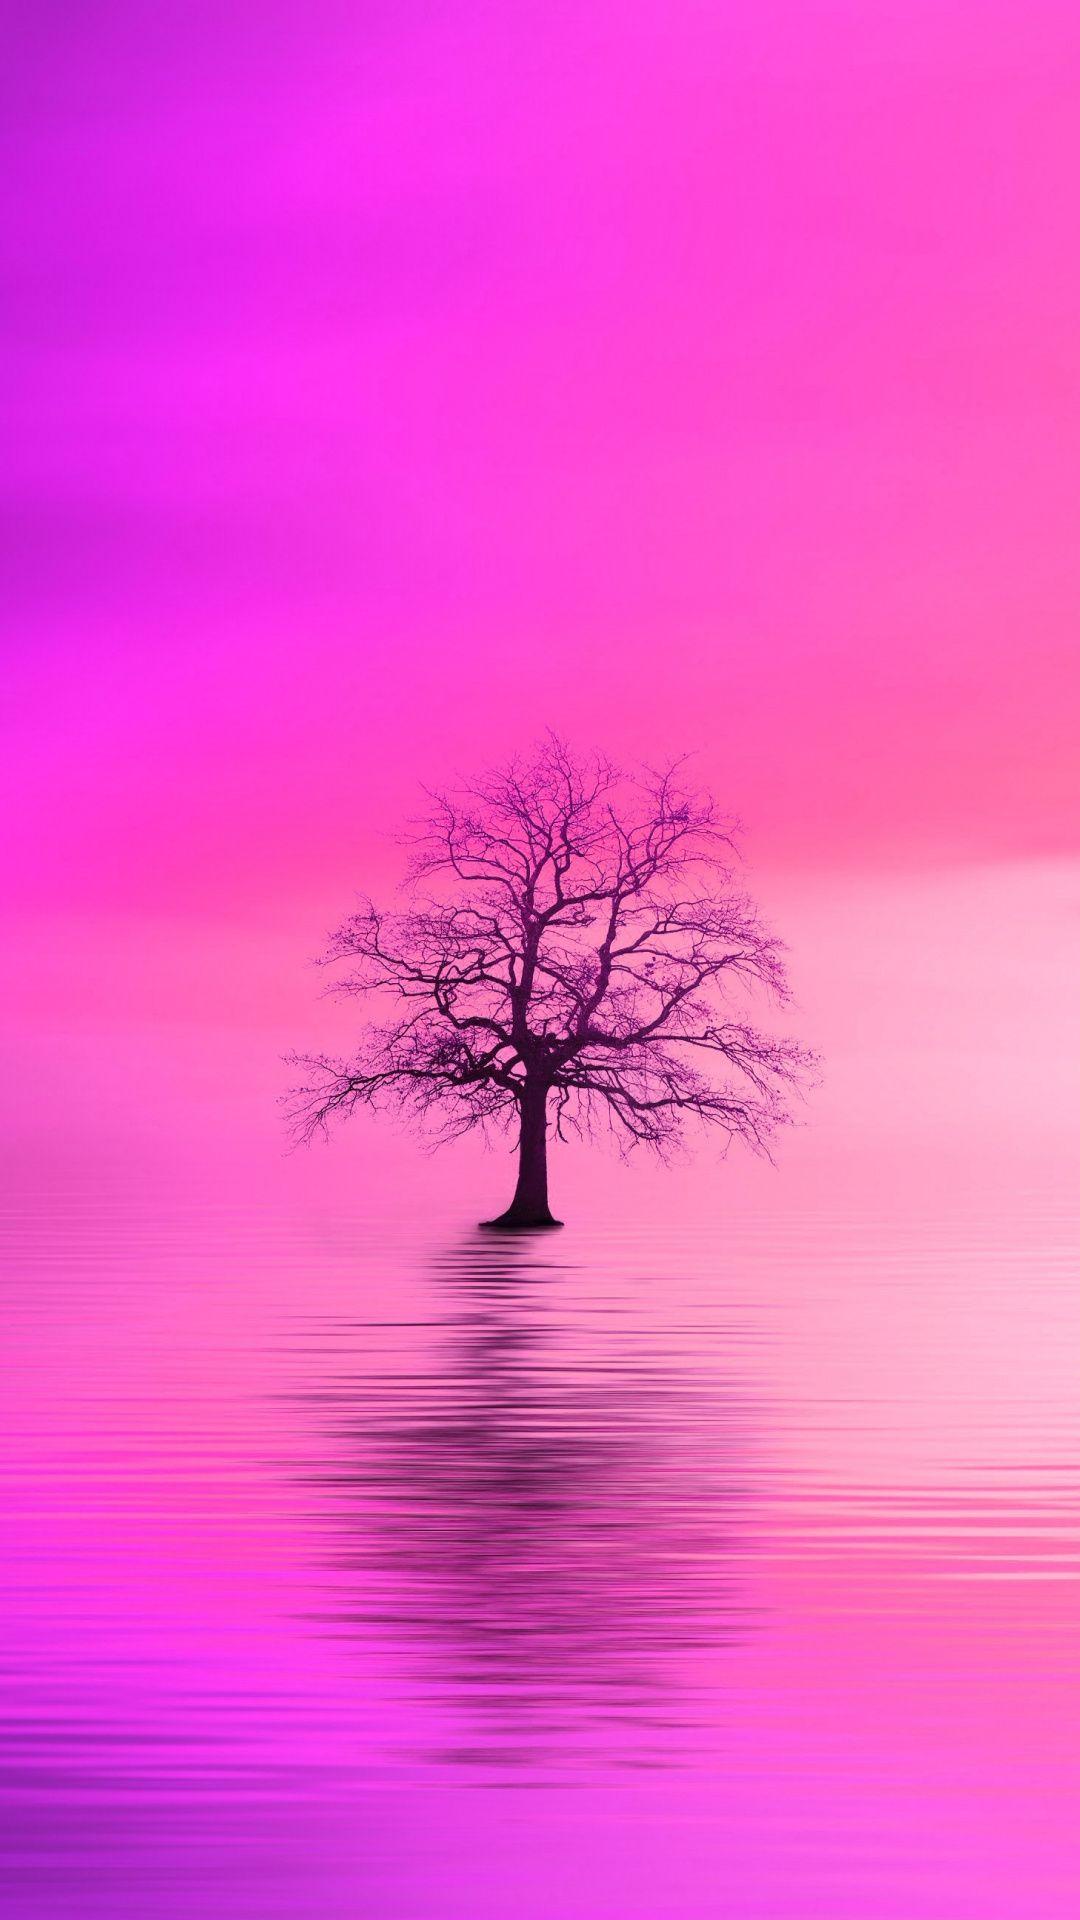 Minimal, pink dawn, tree, lake, digital art wallpaper. A picture to